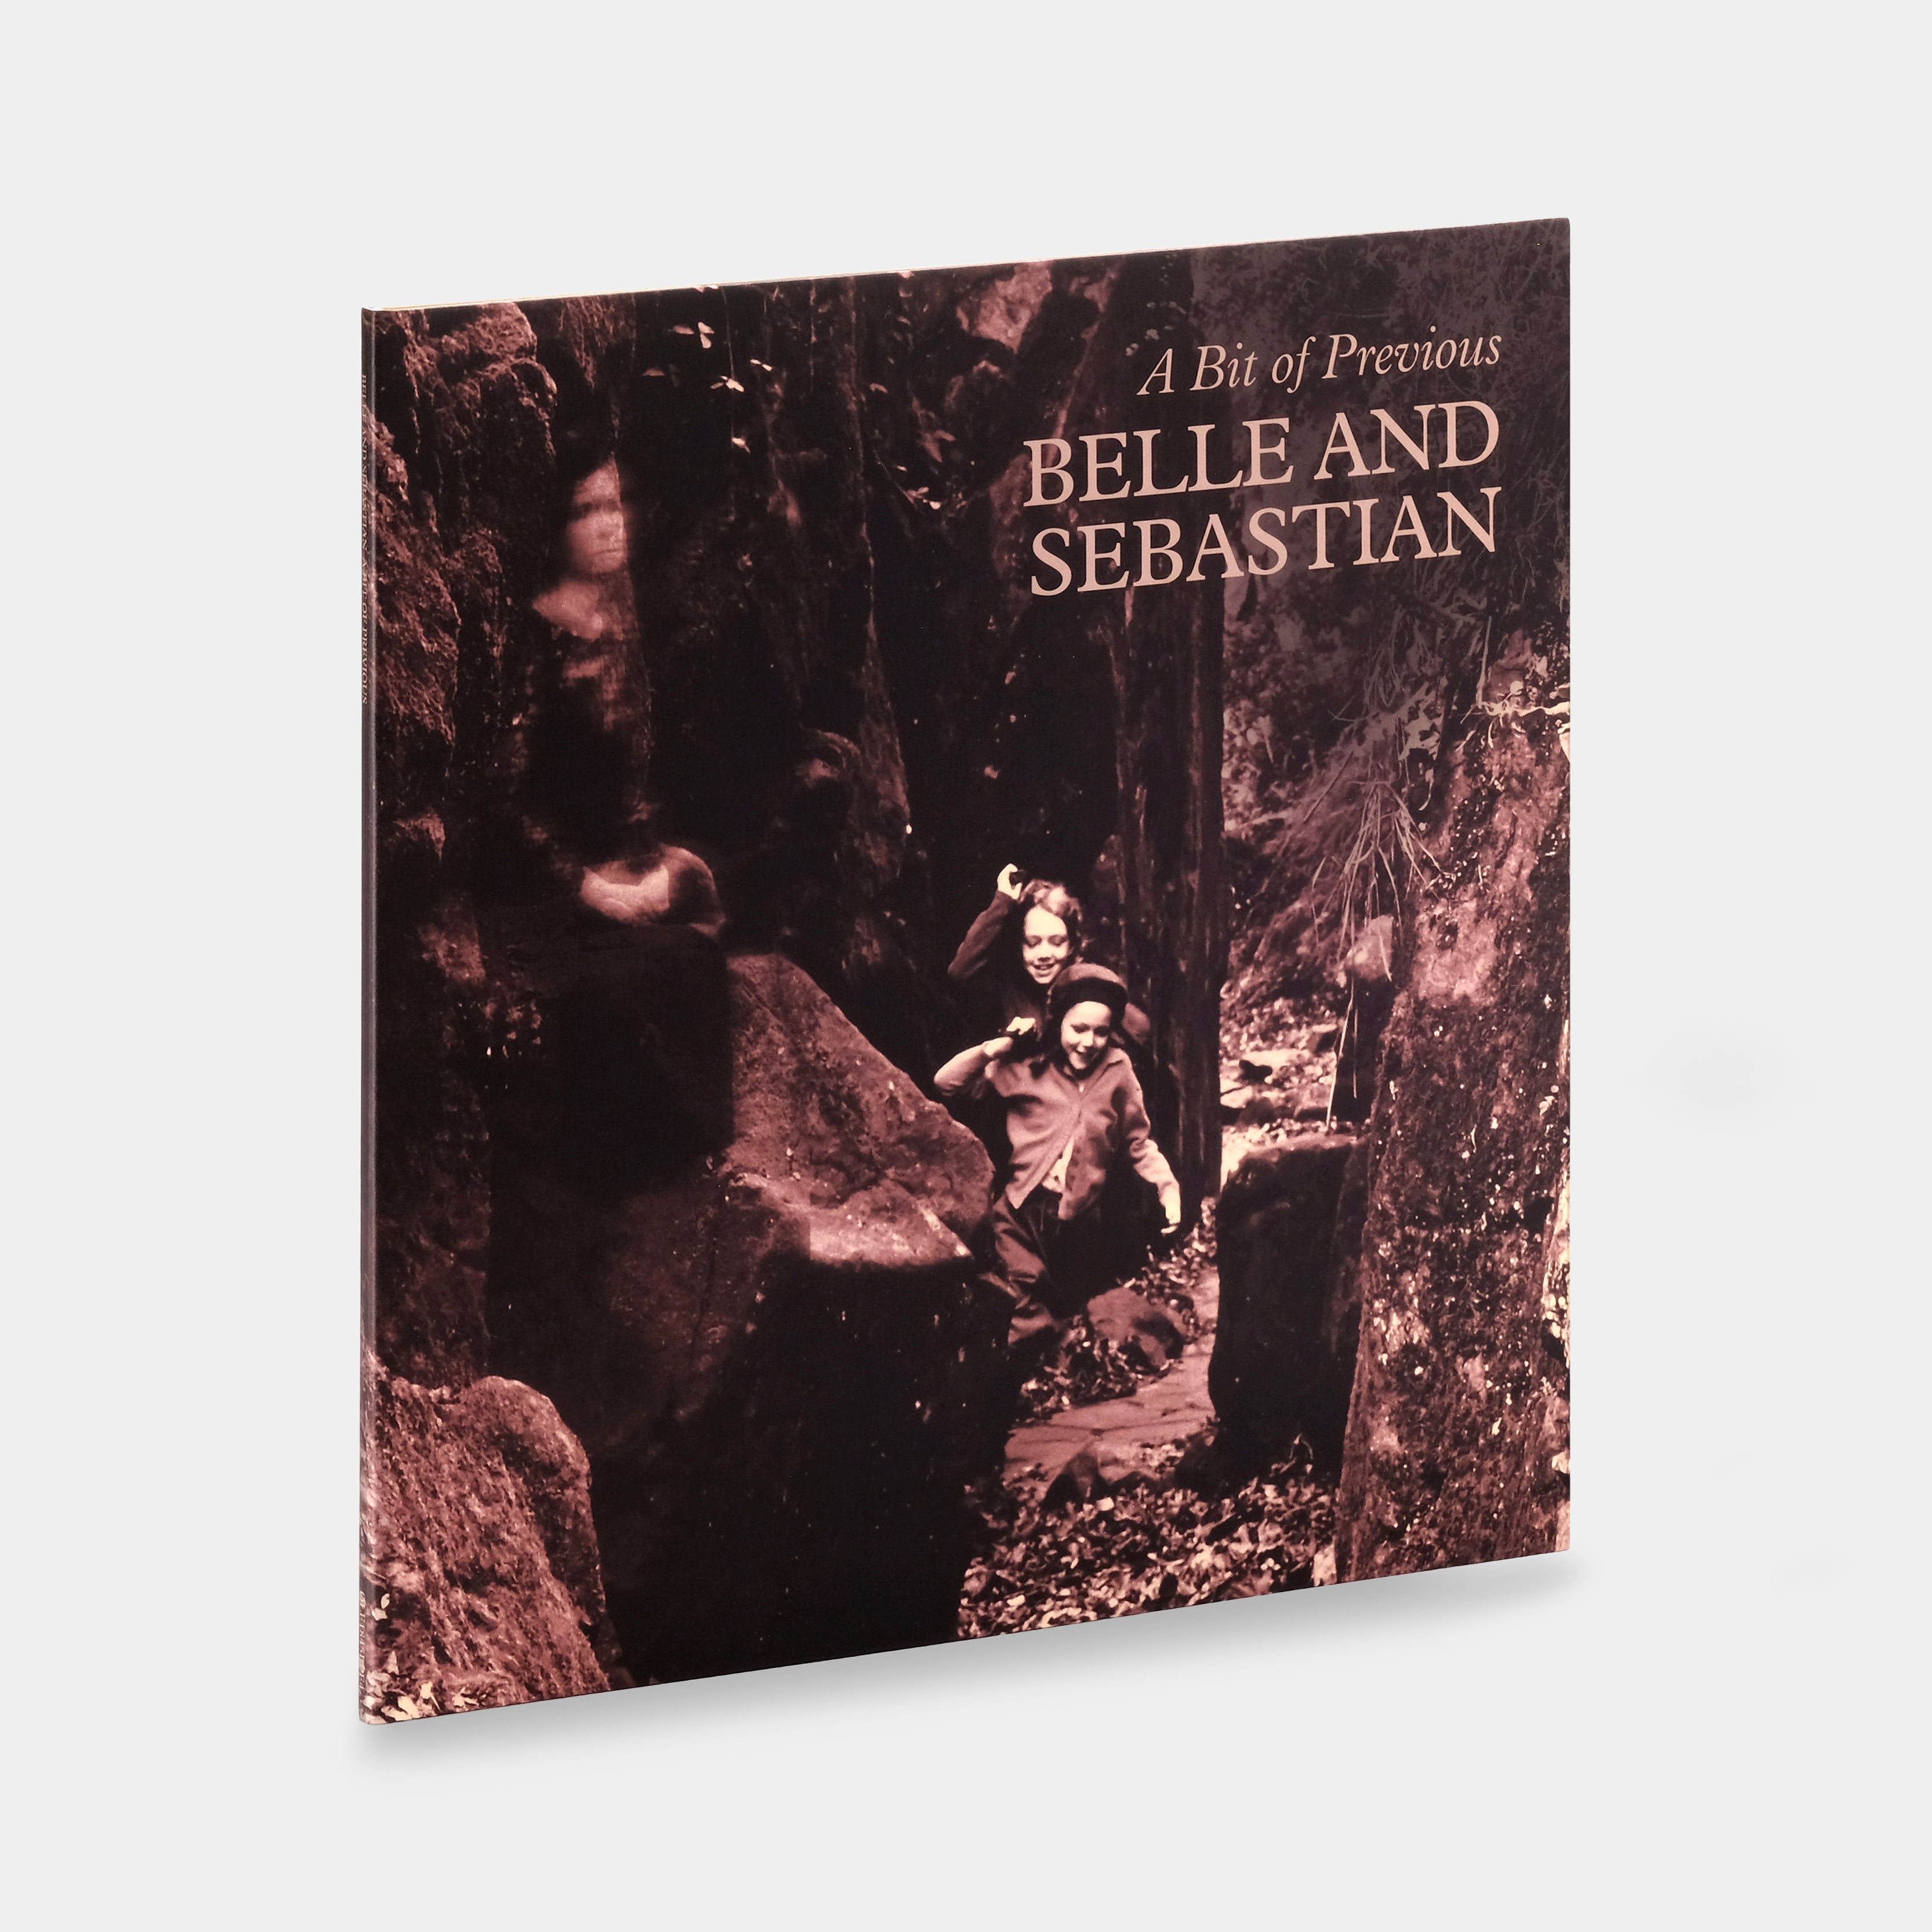 Belle And Sebastian - A Bit Of Previous LP Vinyl Record